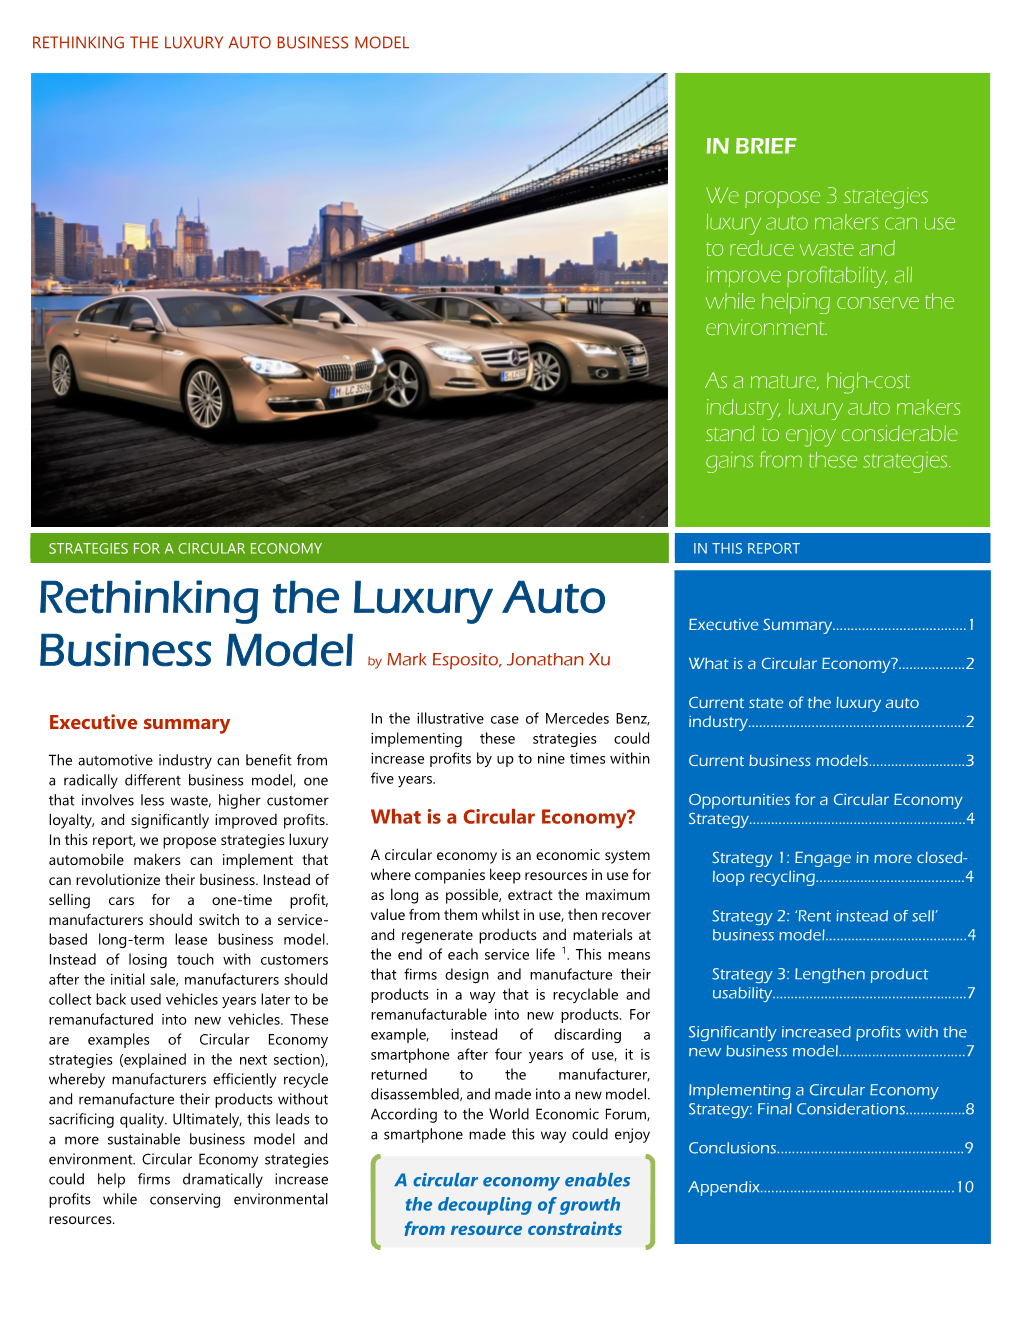 Rethinking the Luxury Auto Business Model